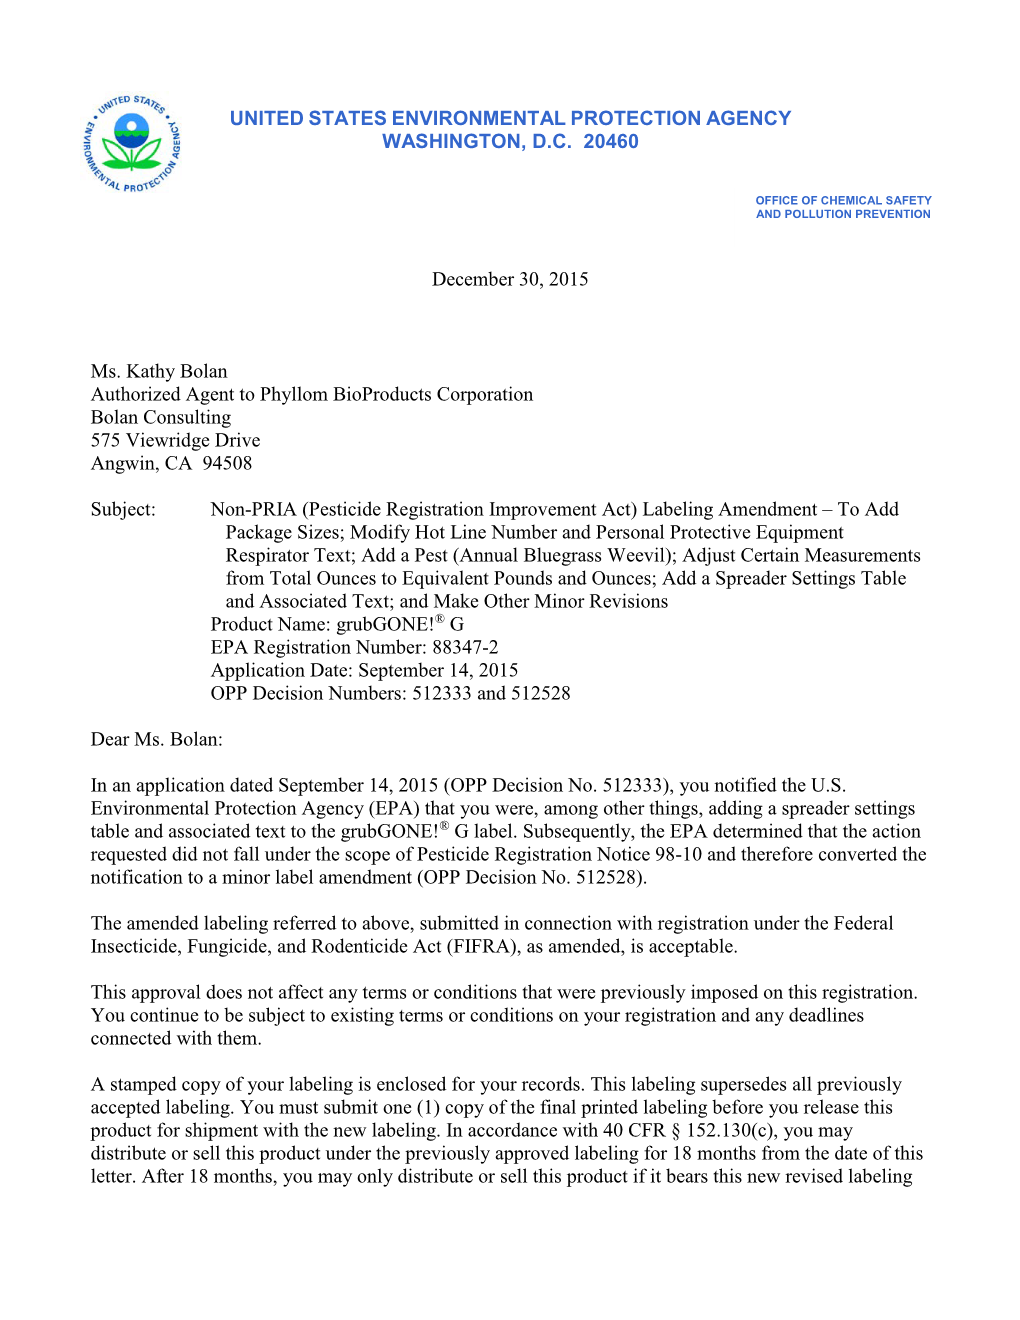 US EPA, Pesticide Product Label, GRUBGONE! G,12/30/2015